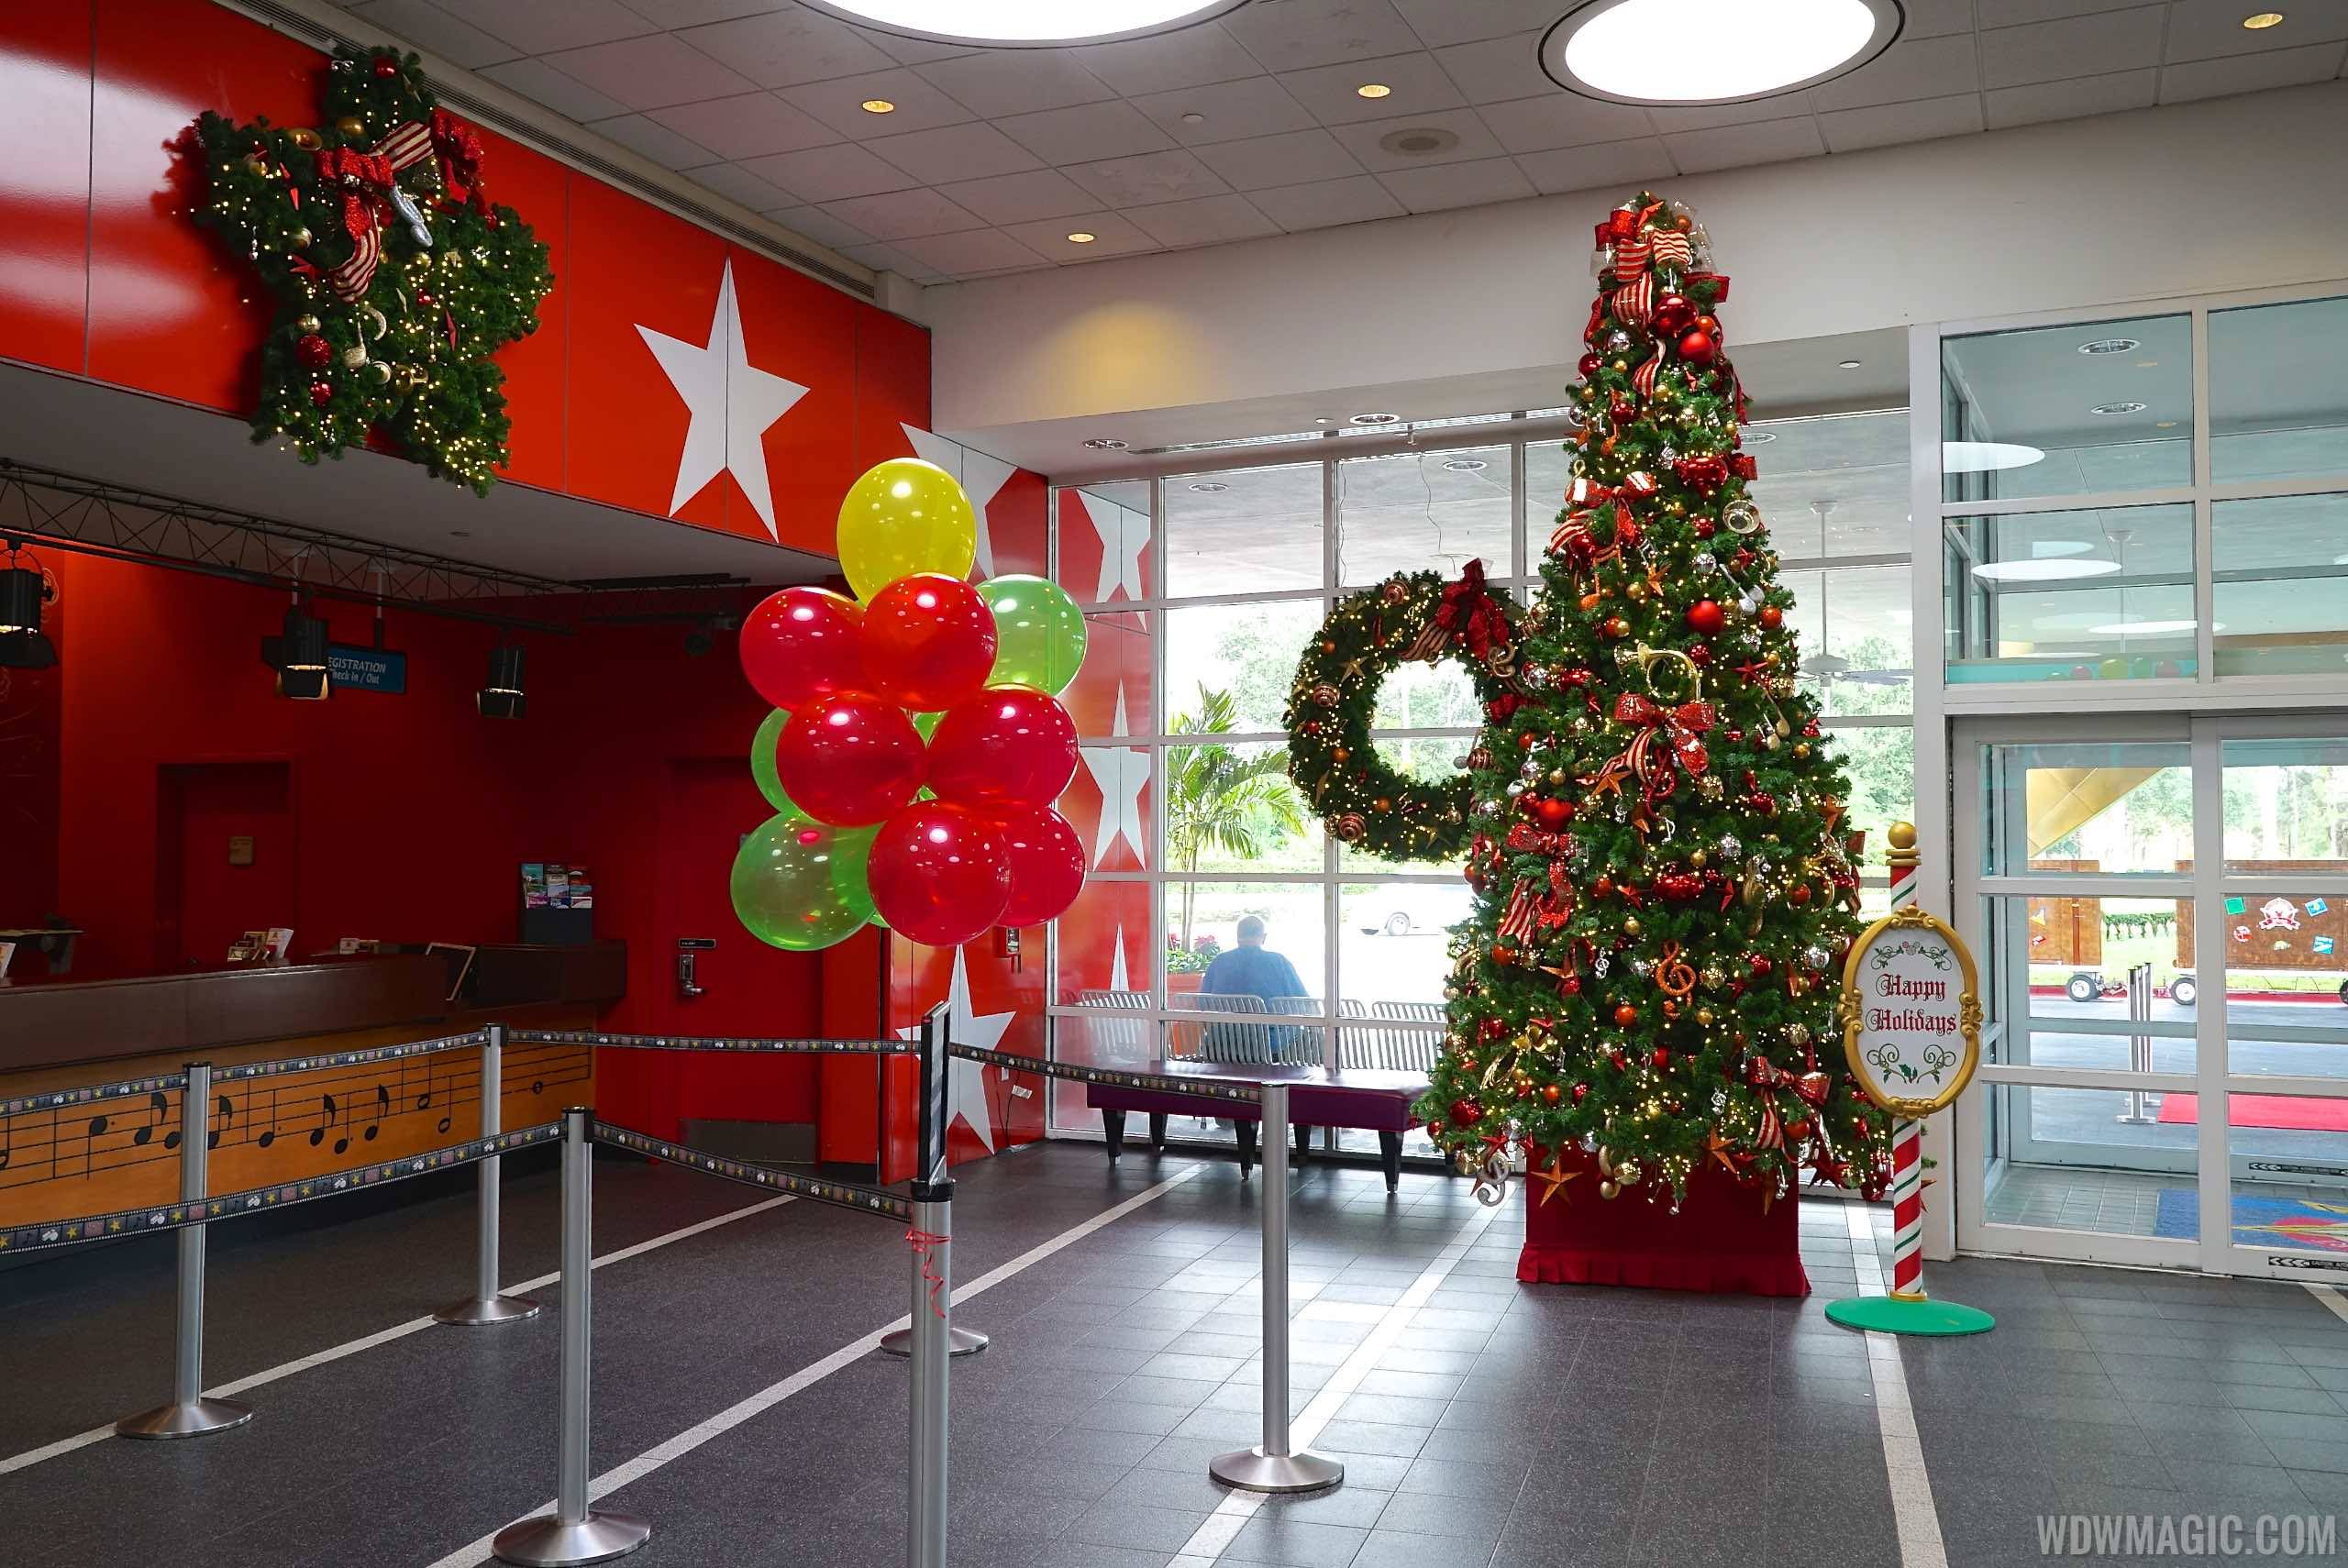 PHOTOS - Holiday decorations at Disney's All Star Music Resort